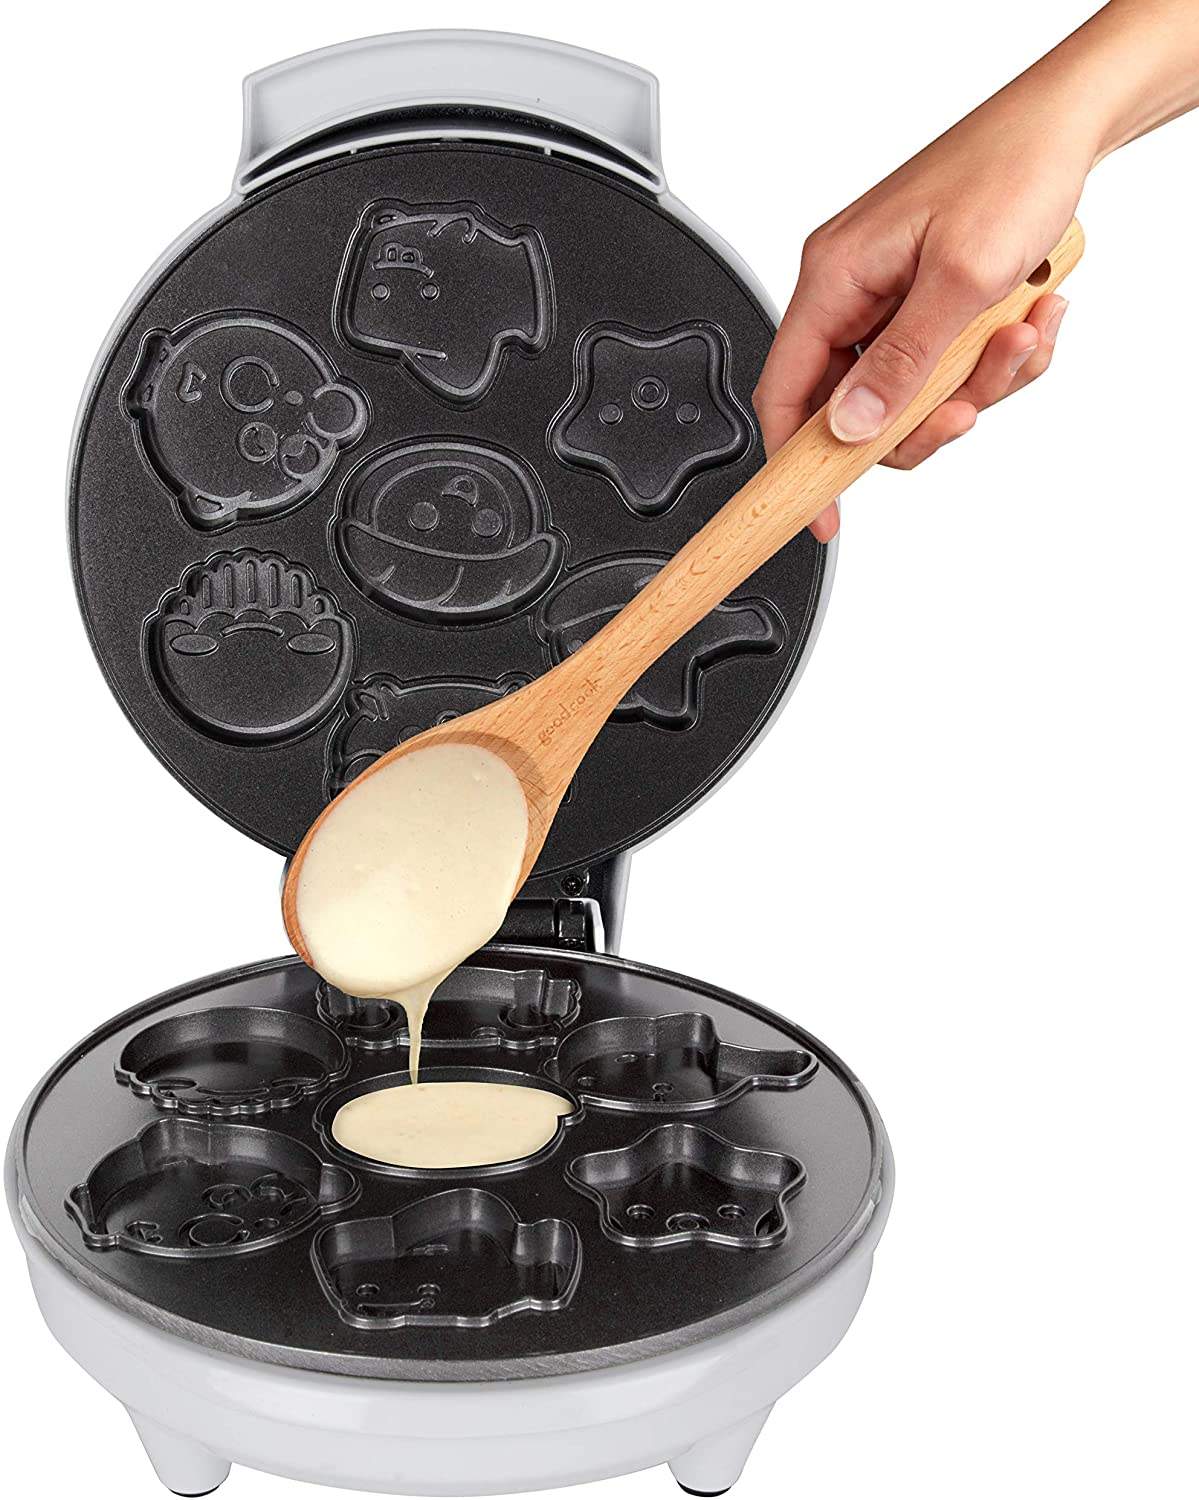 Animal Mini Waffle Maker - Make 7 Different Shaped Pancakes